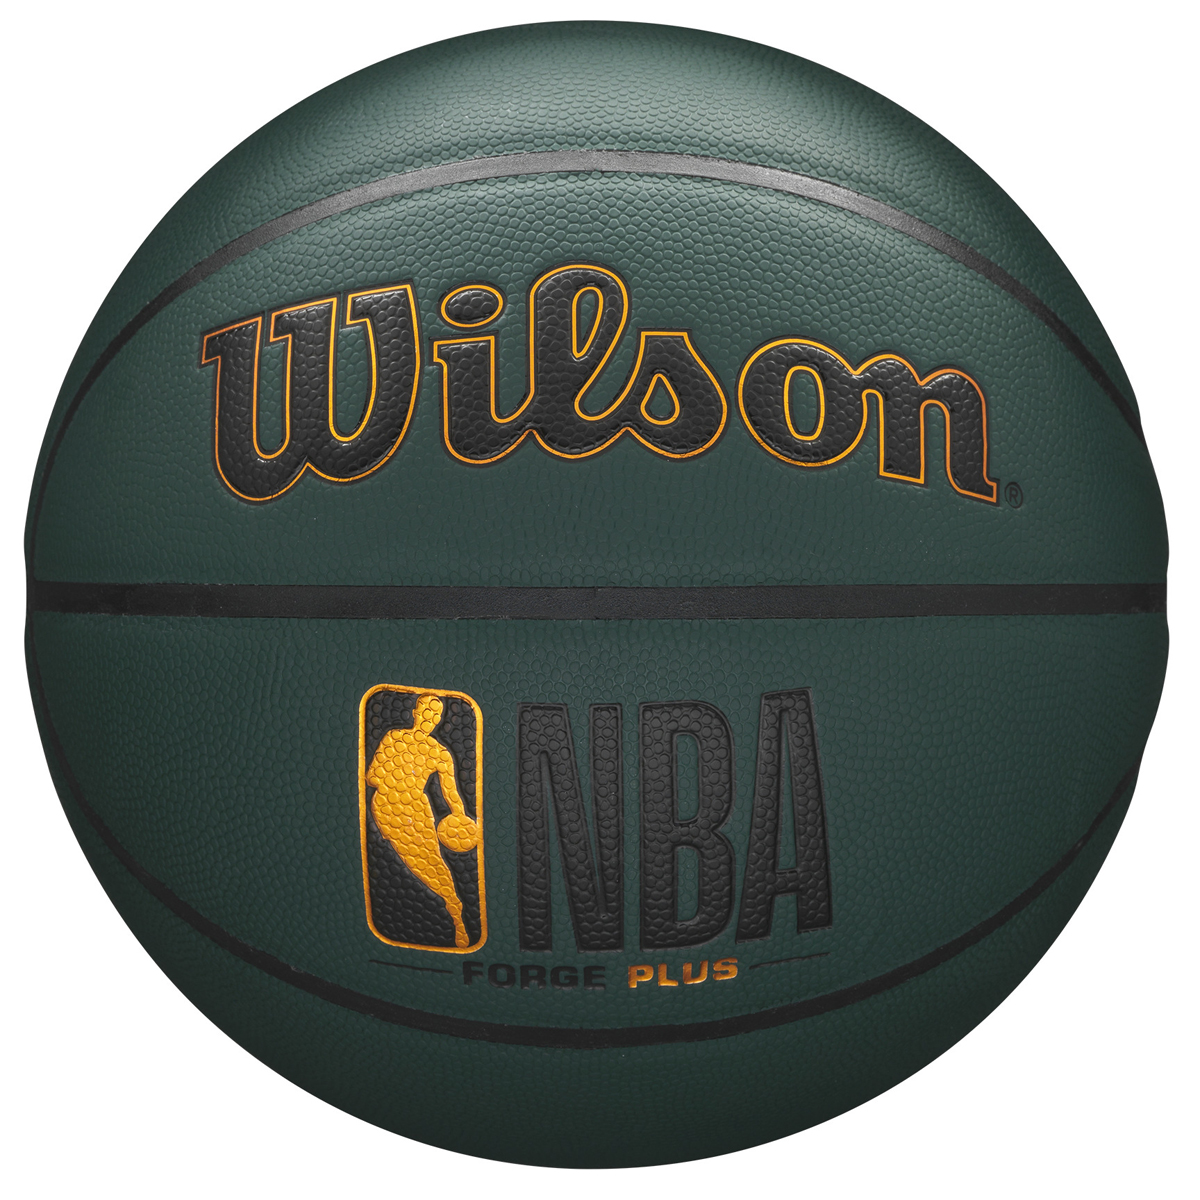 Wilson Nba Forge Plus Basketball, Green